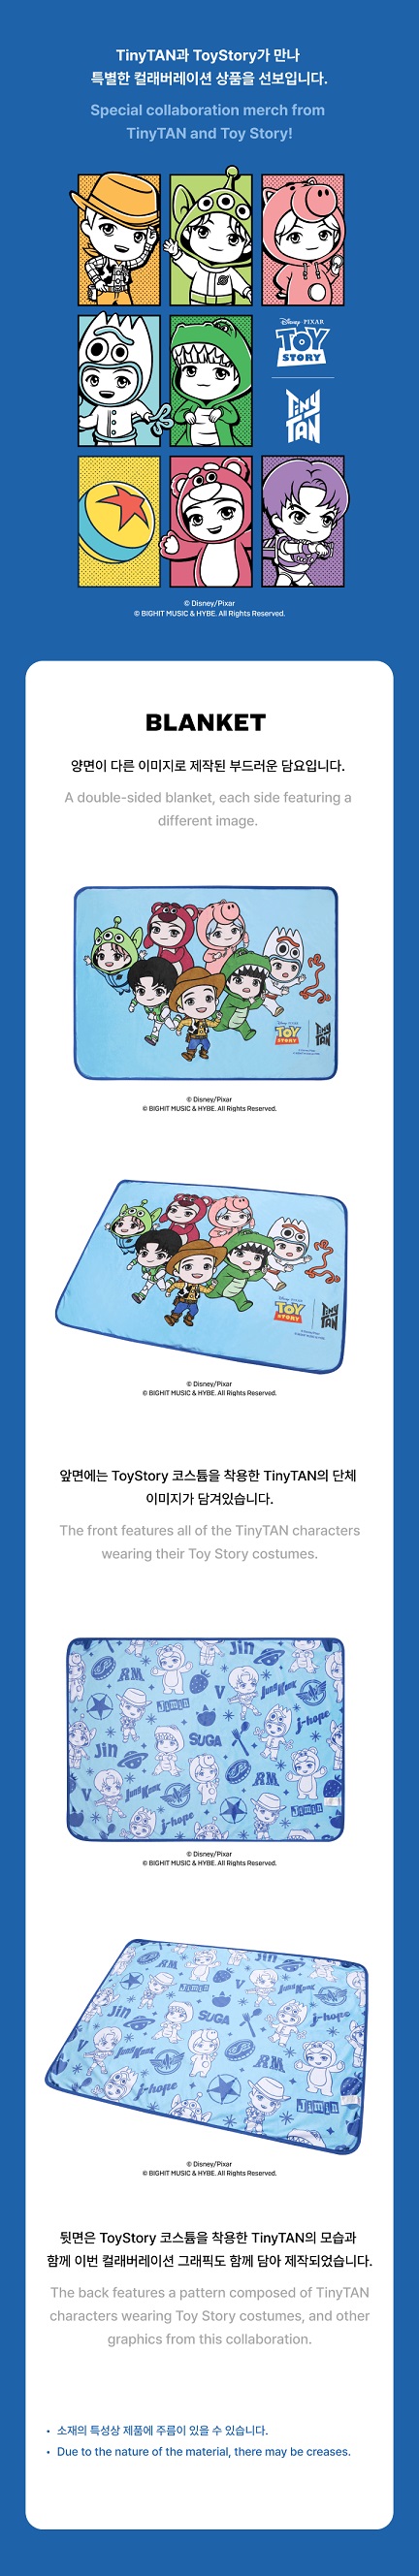 Buy TinyTan ToyStory now!